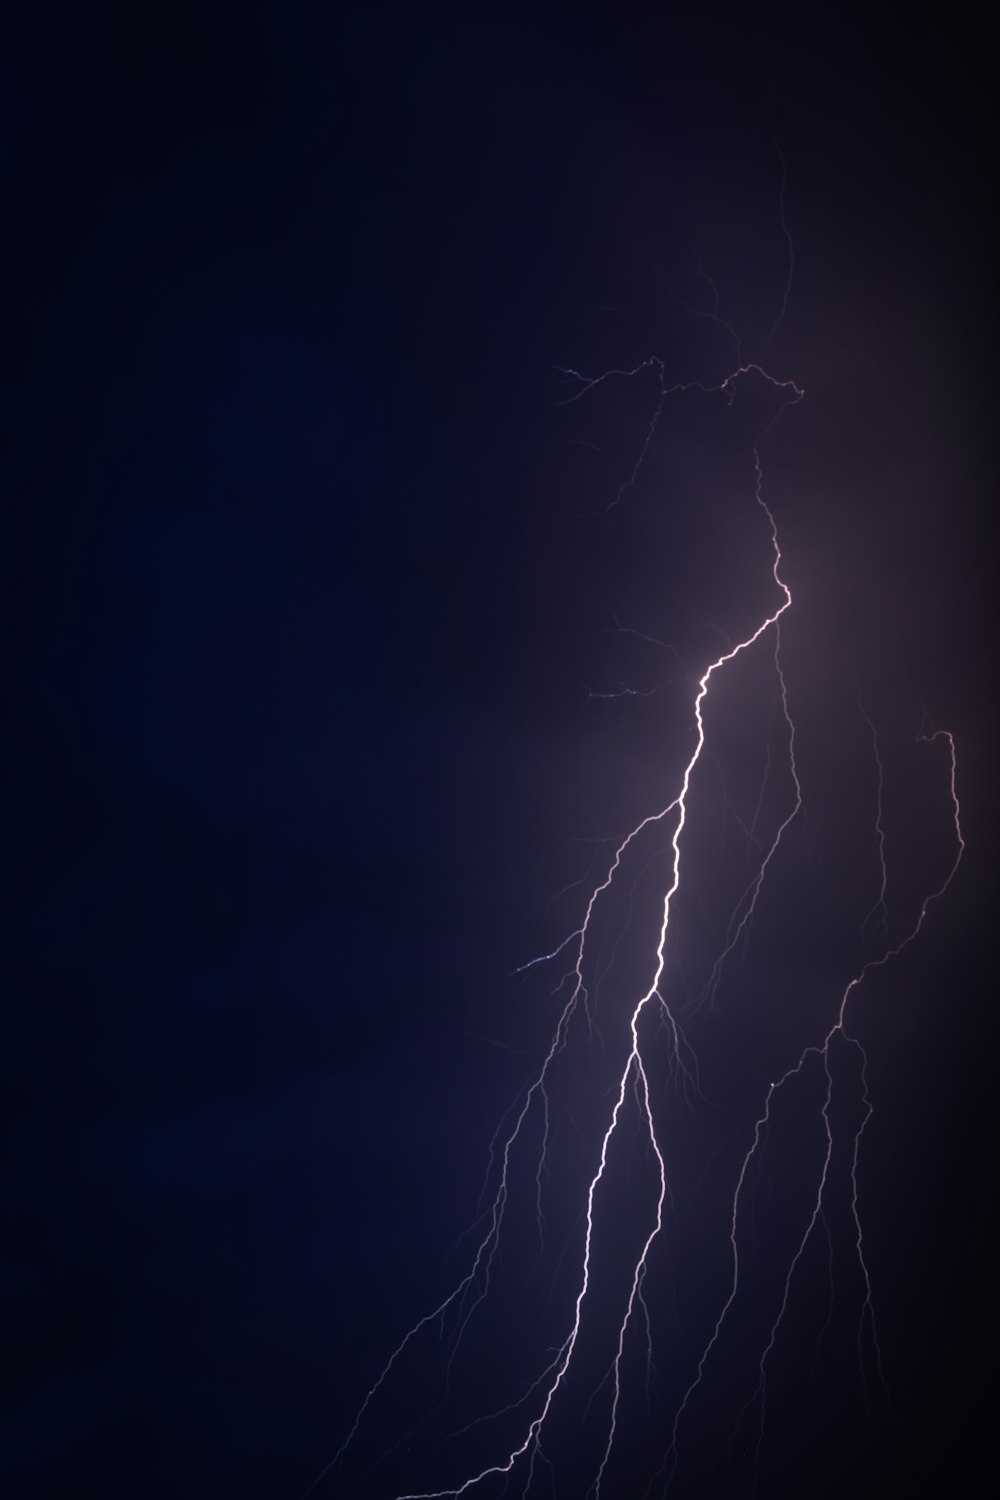 a lightning bolt is seen in the dark sky